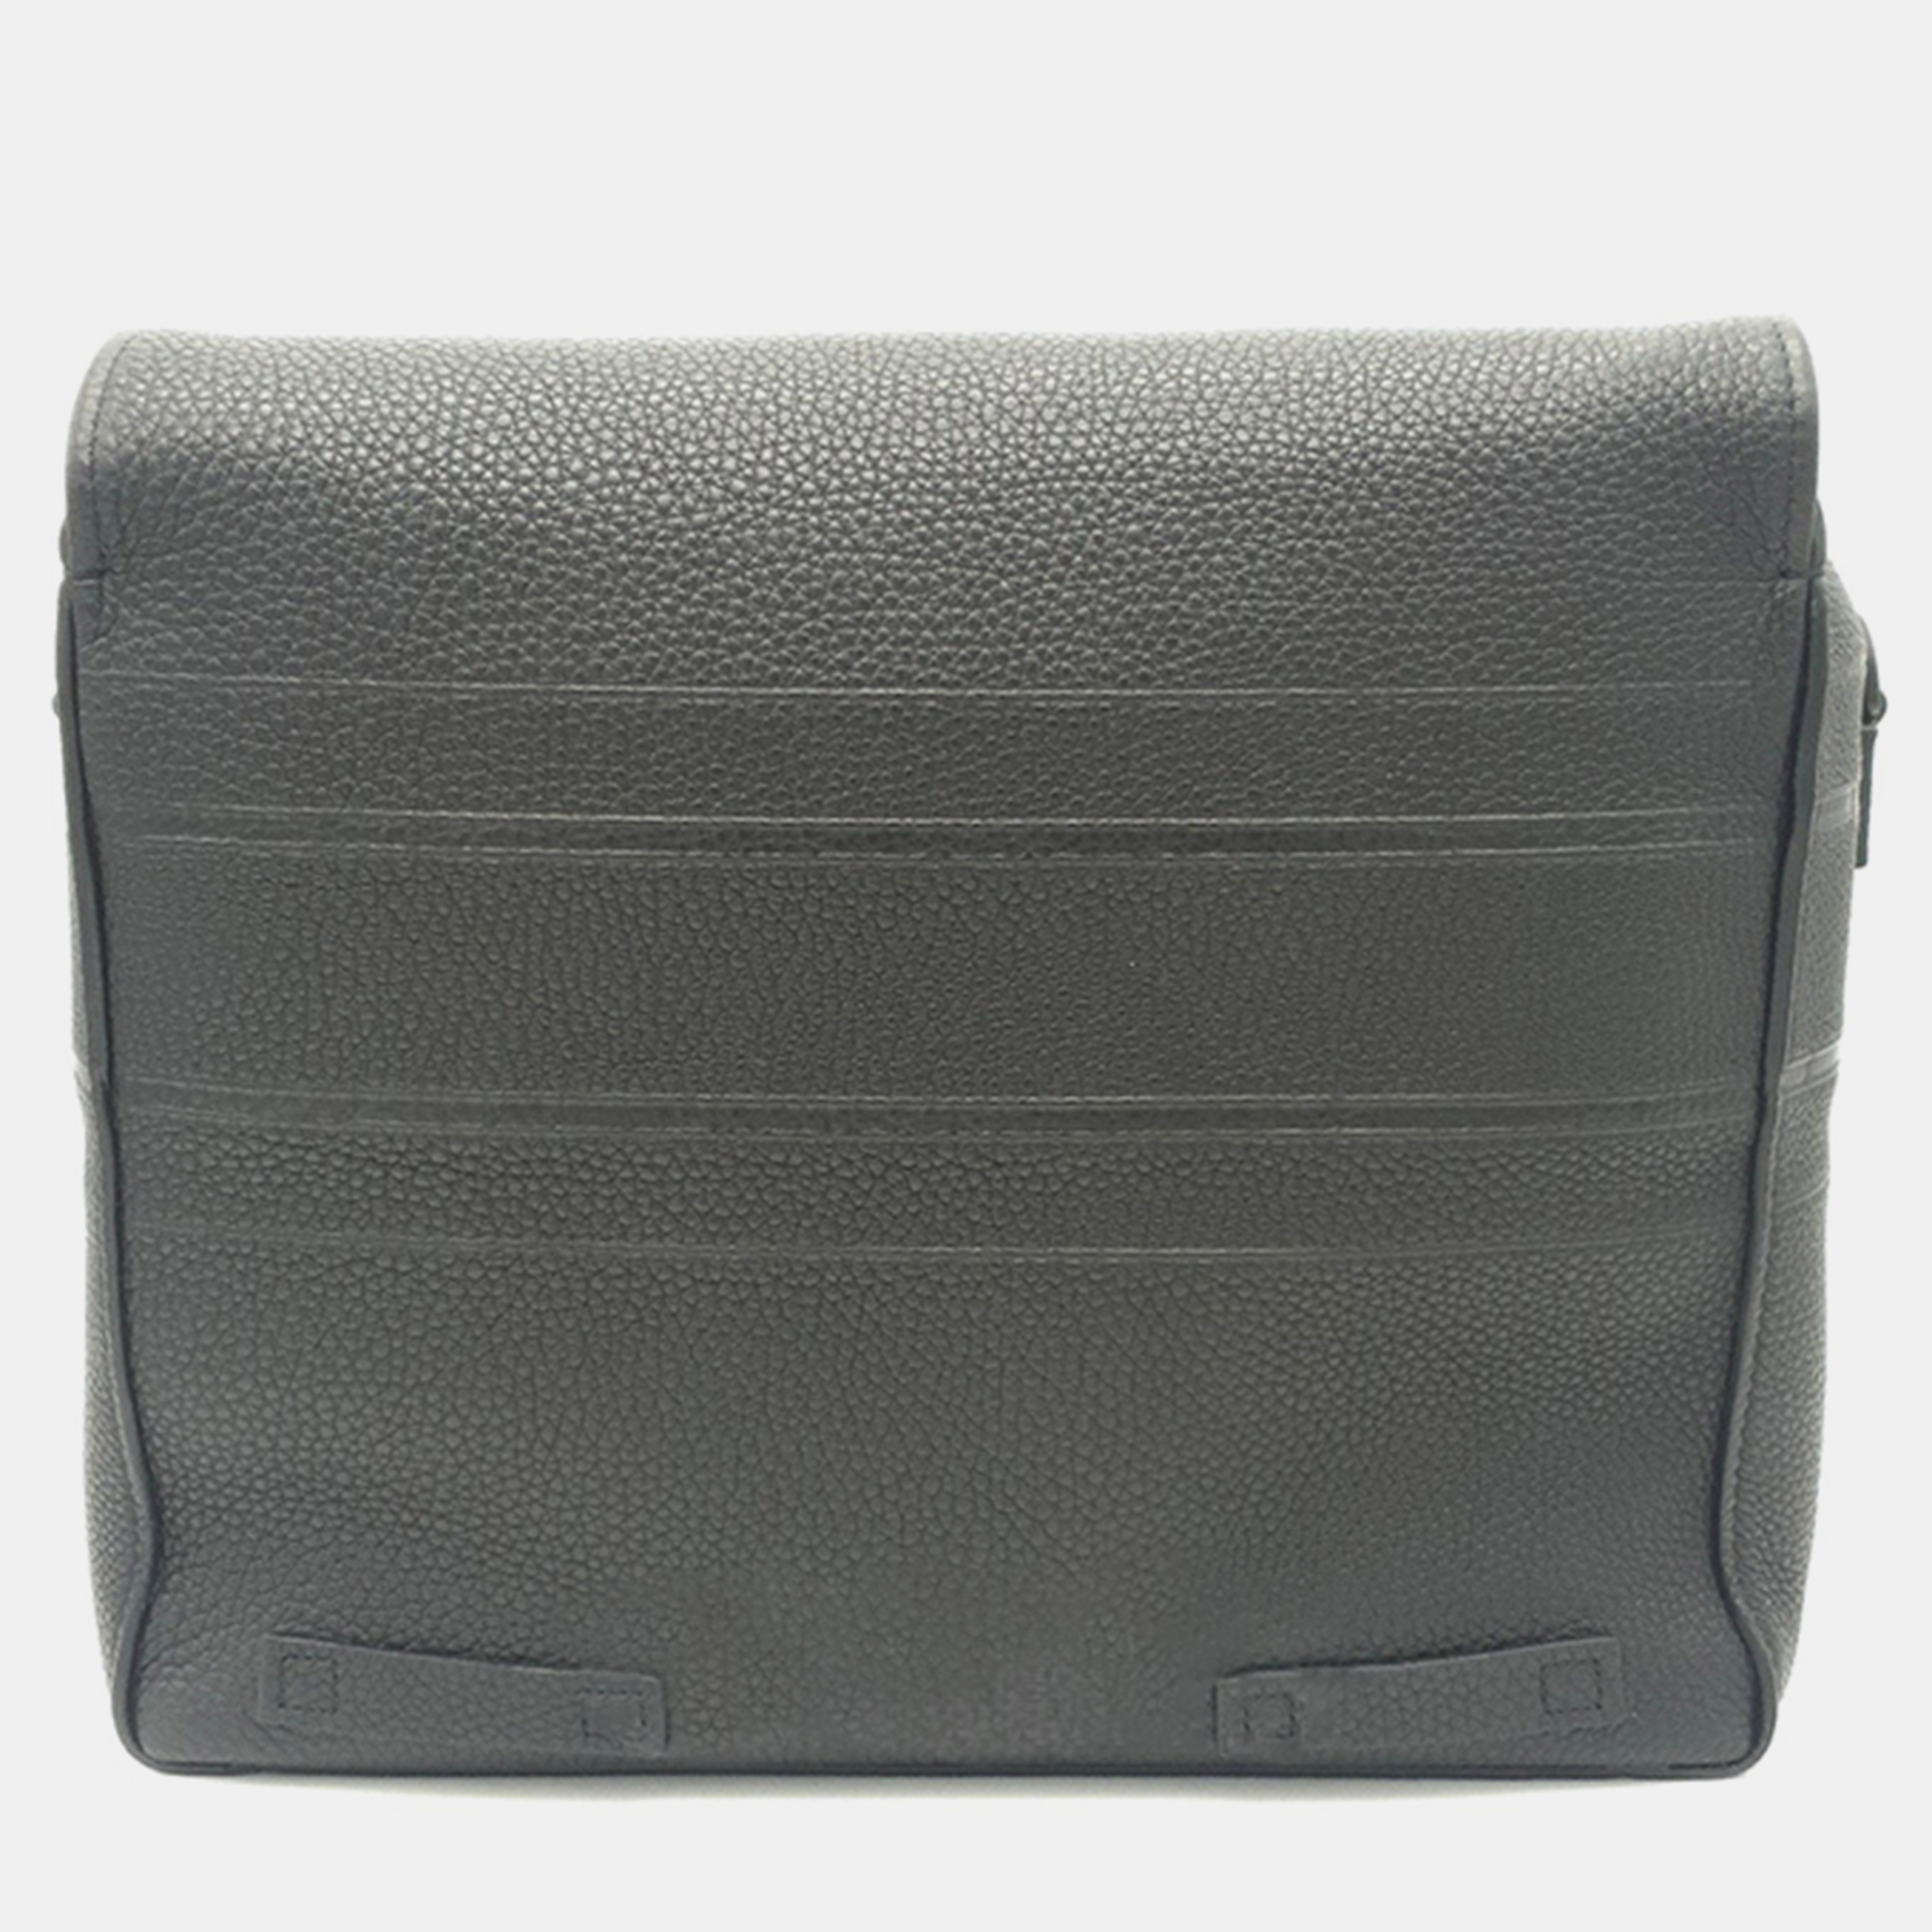 Christian Dior Black Leather Camp Bag